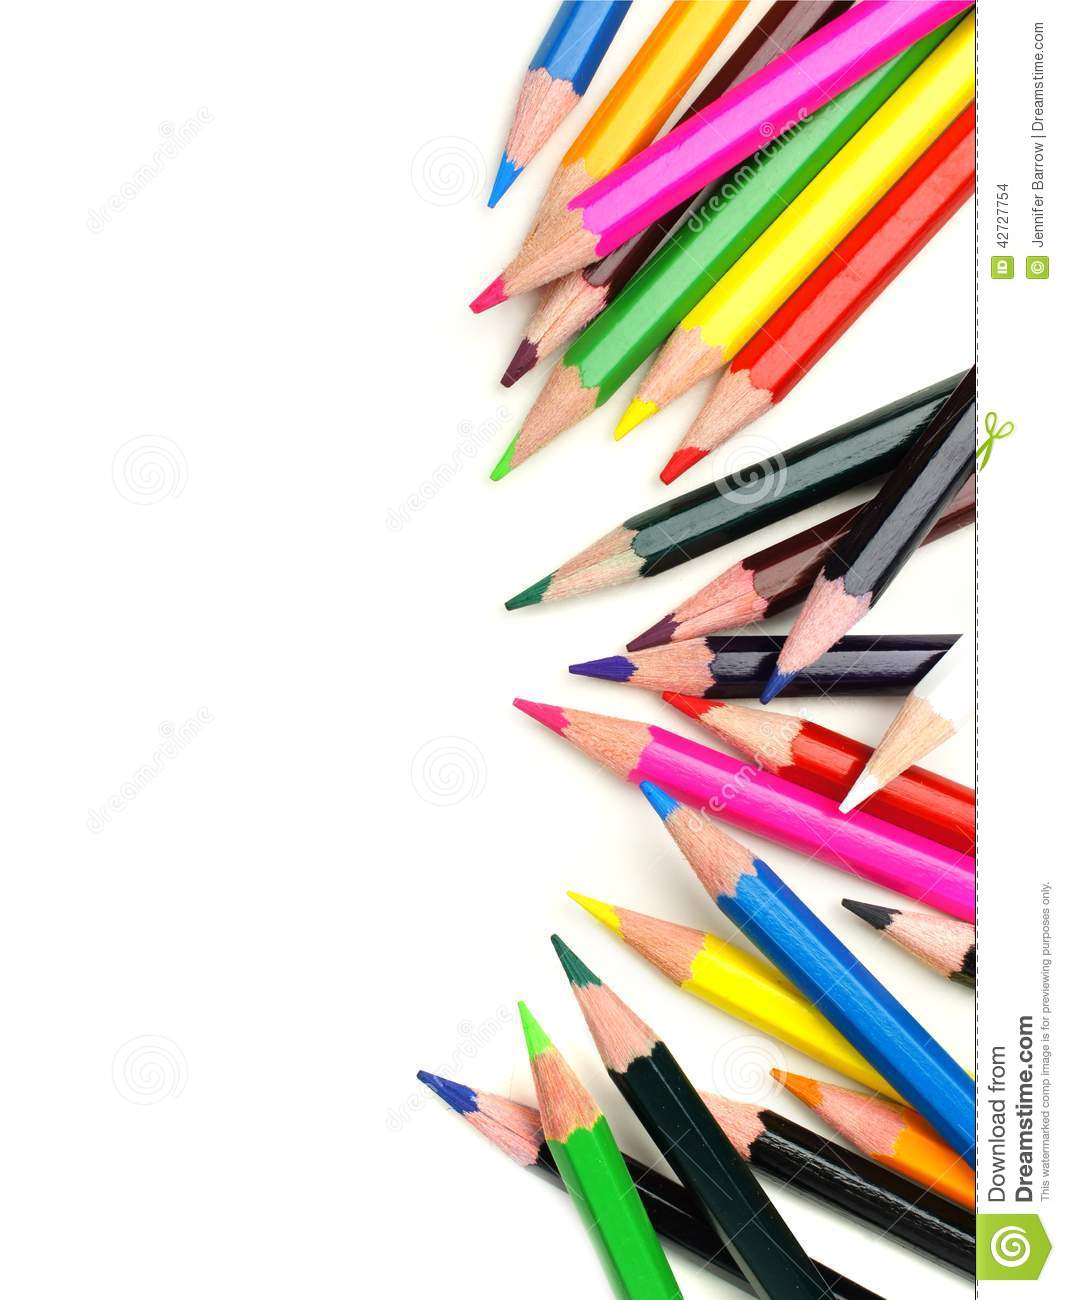 Image Crayon Pencil Border Pc Android iPhone And iPad Wallpaper